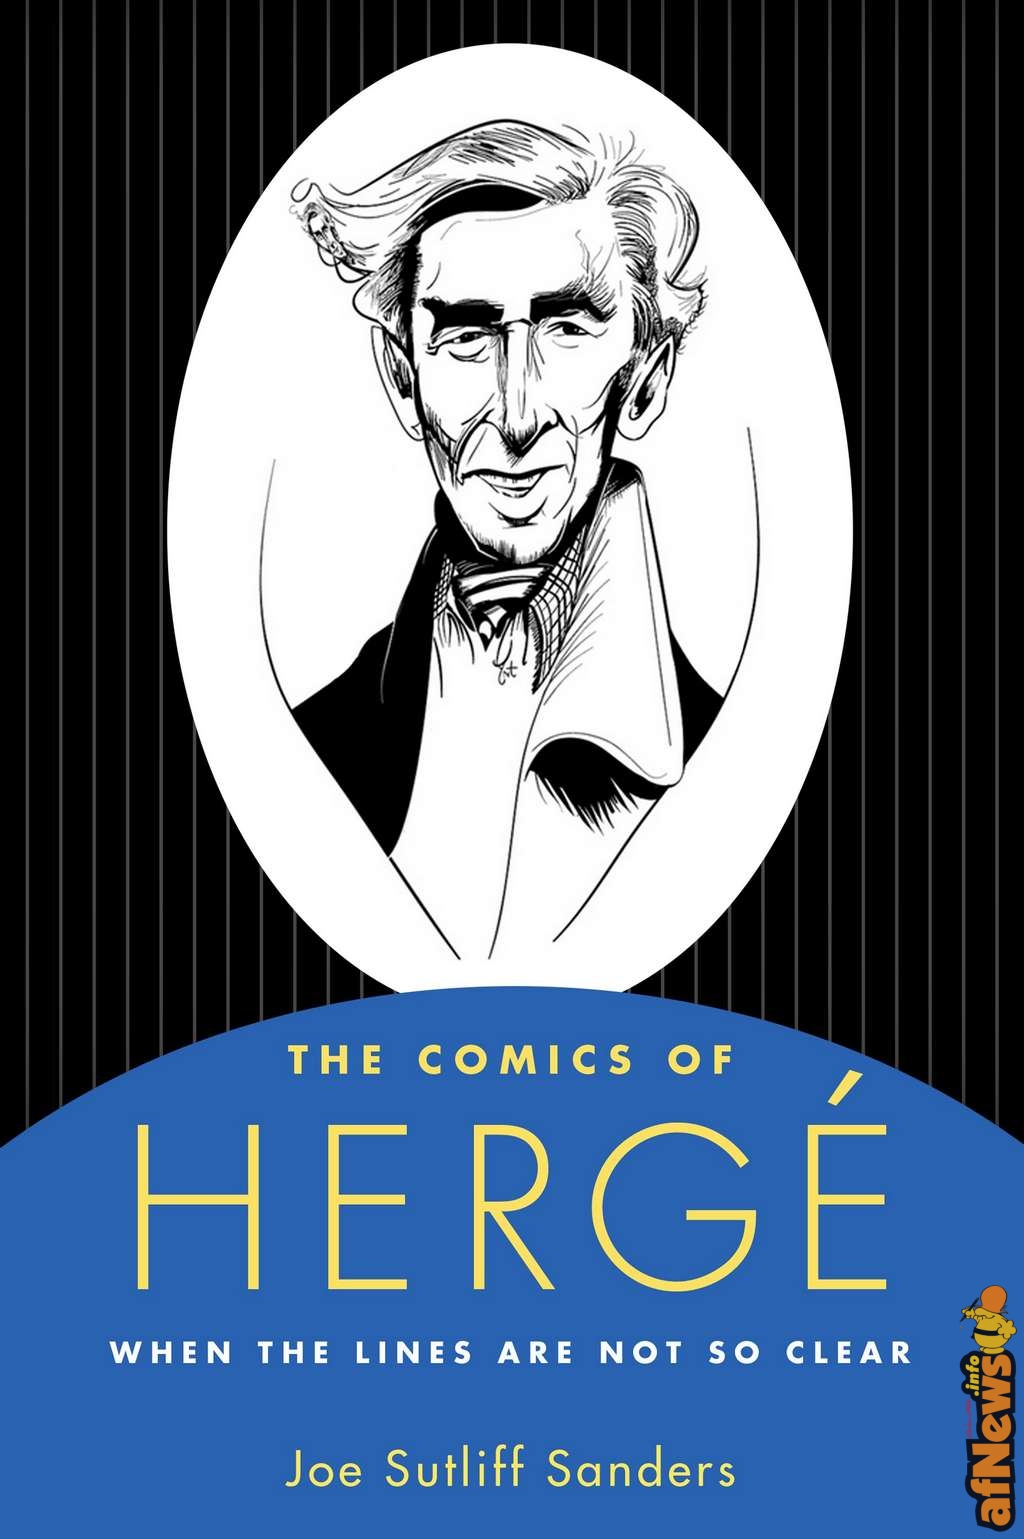 The Comics of Hergé - afnews